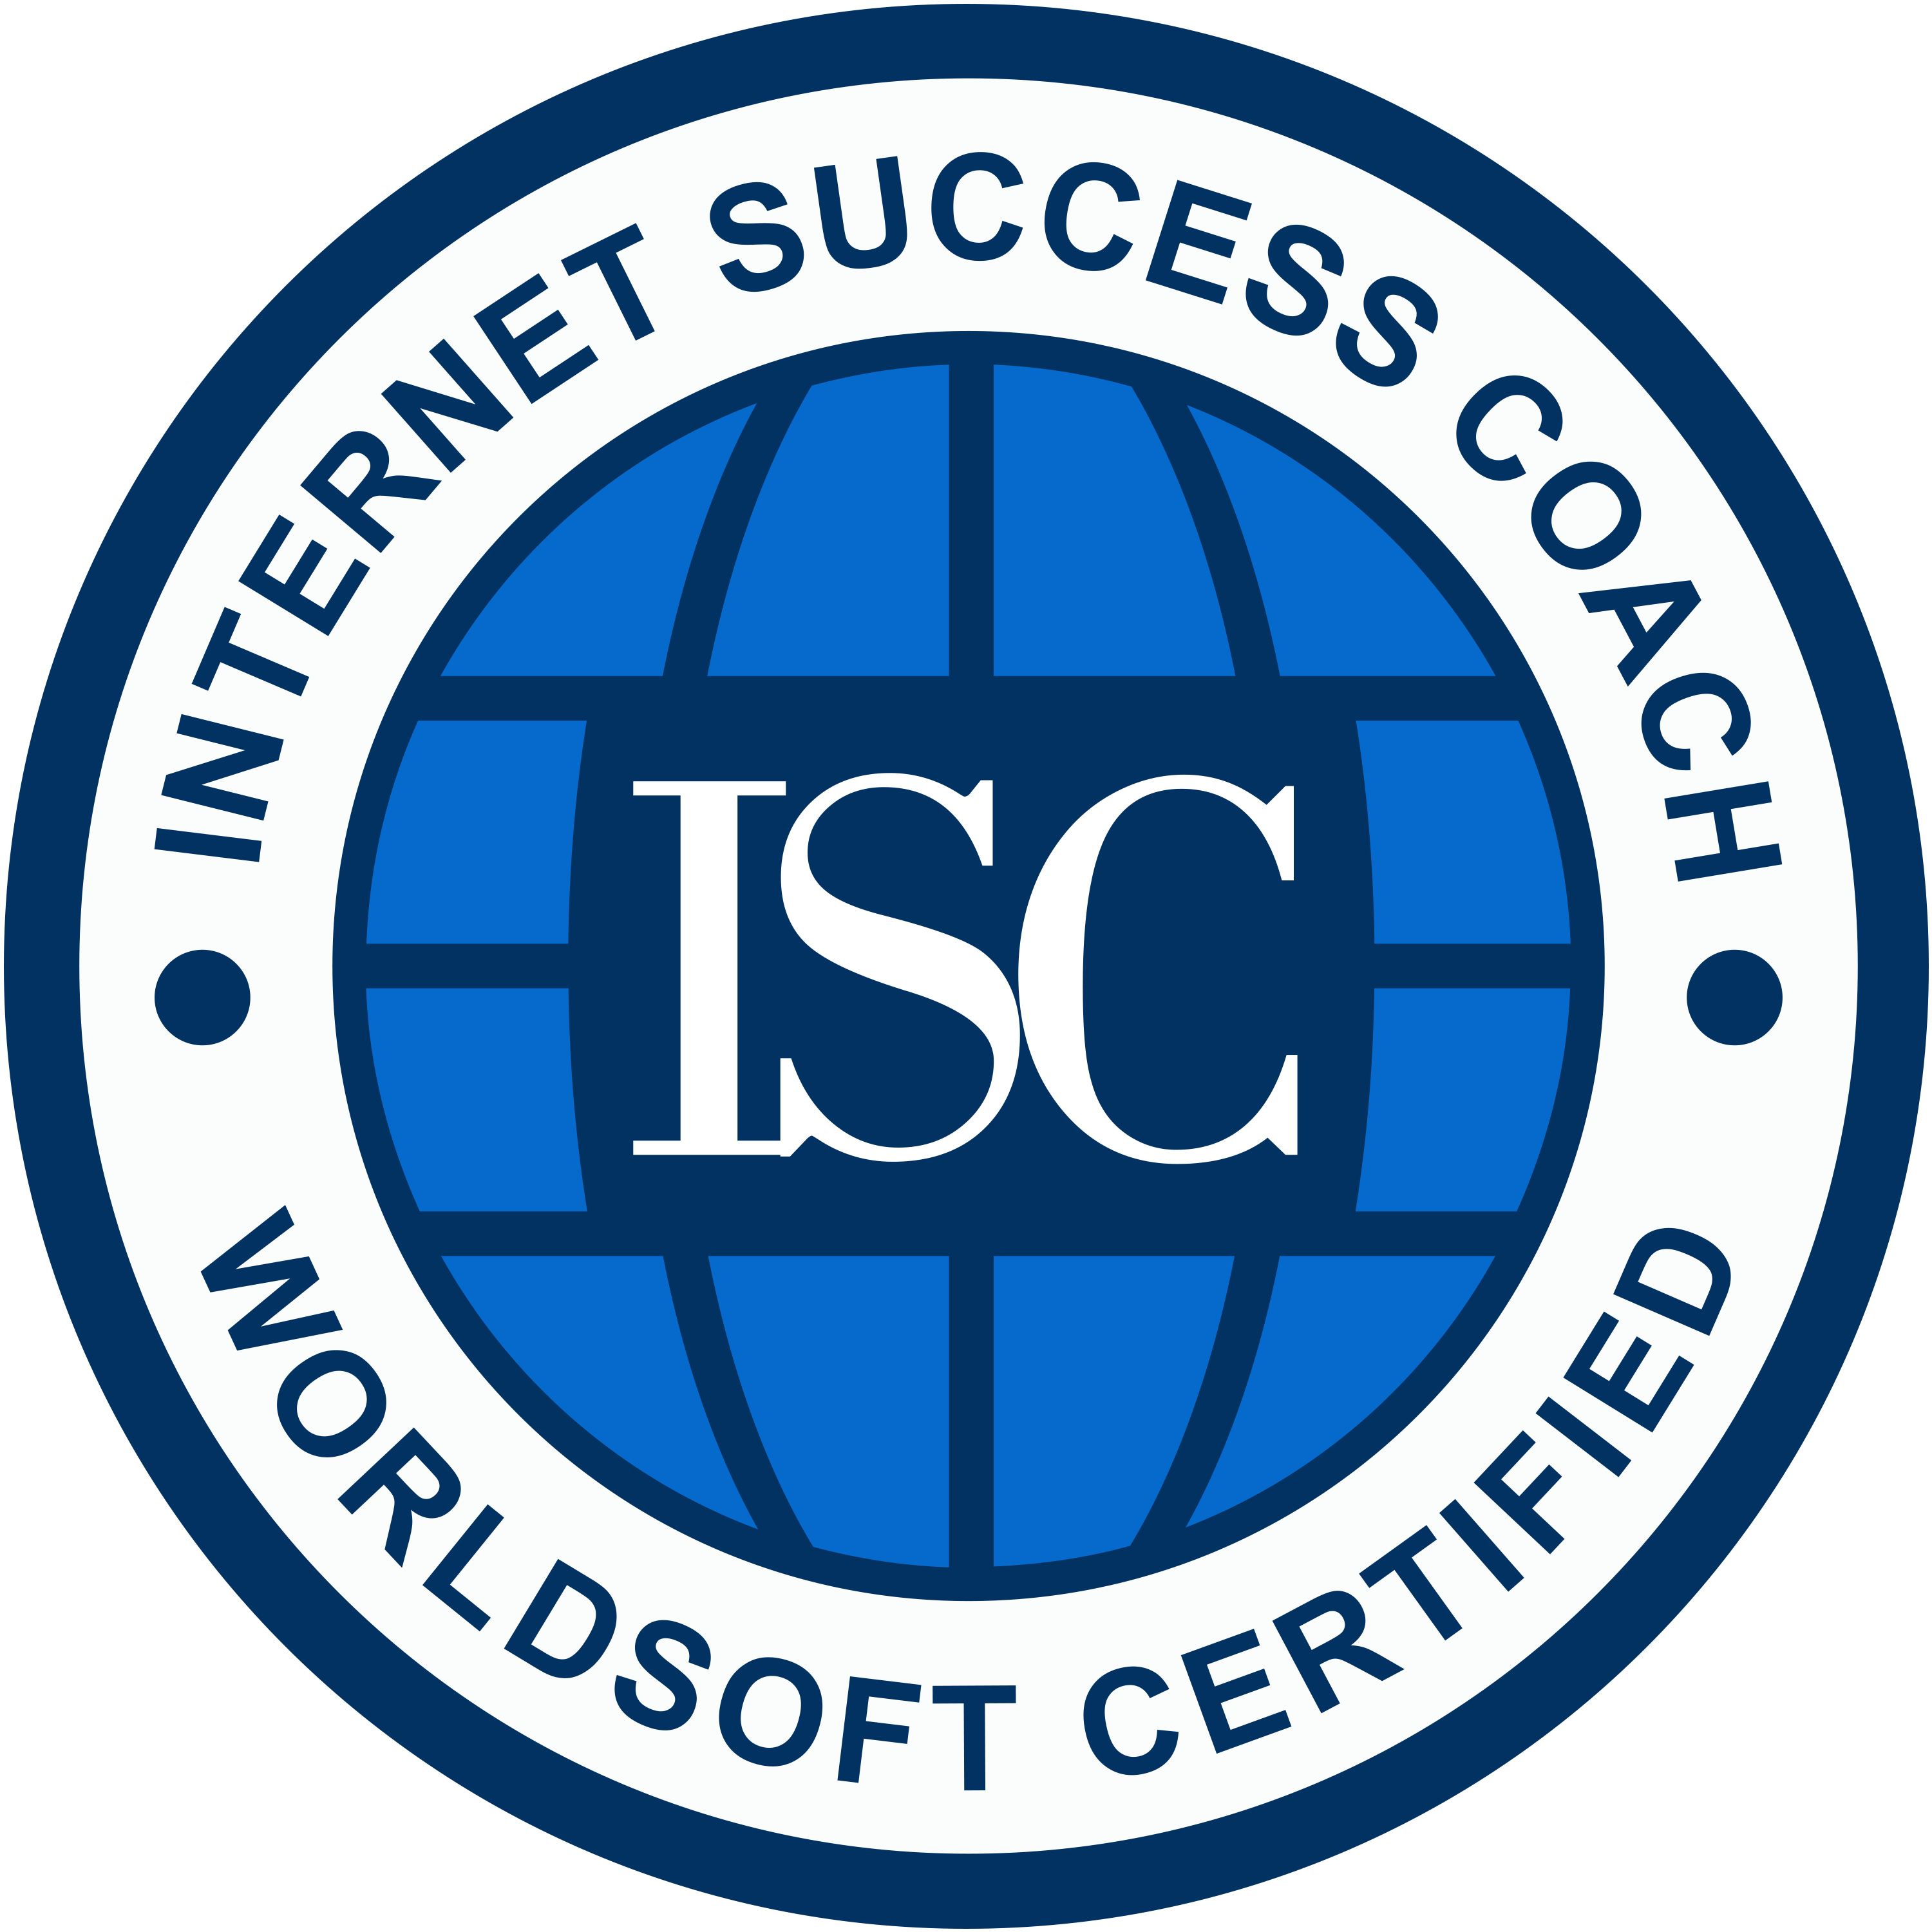 Worldsoft Certified Internet Success Coach